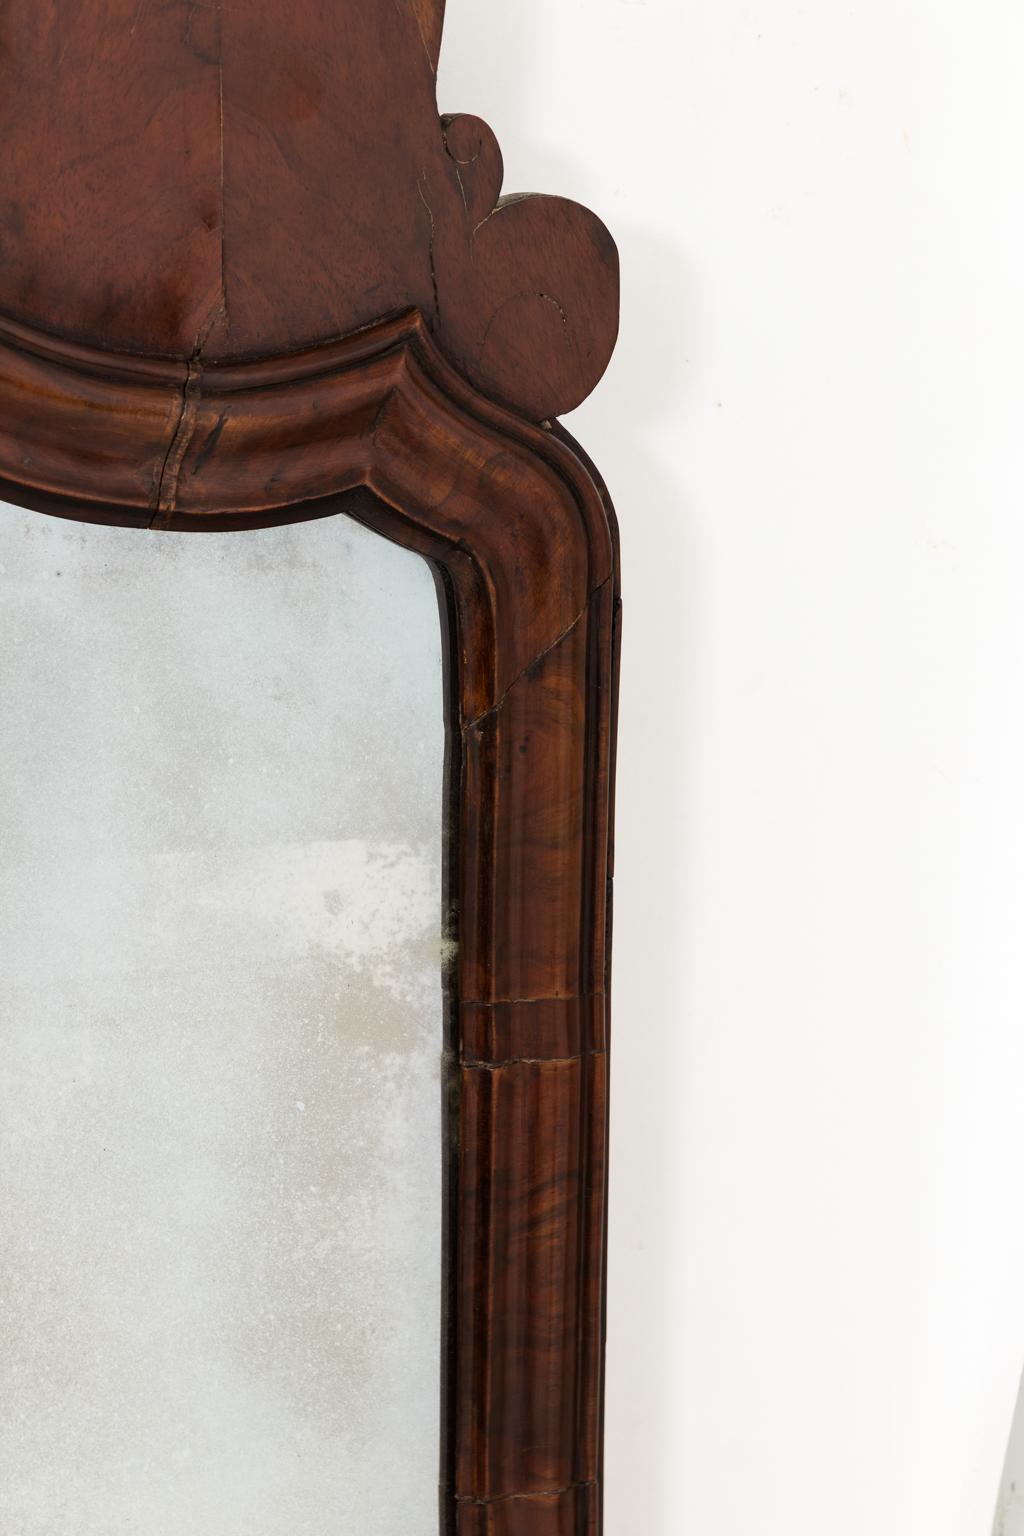 Georgian Mahogany Mirror, circa Late 18th Century For Sale 2